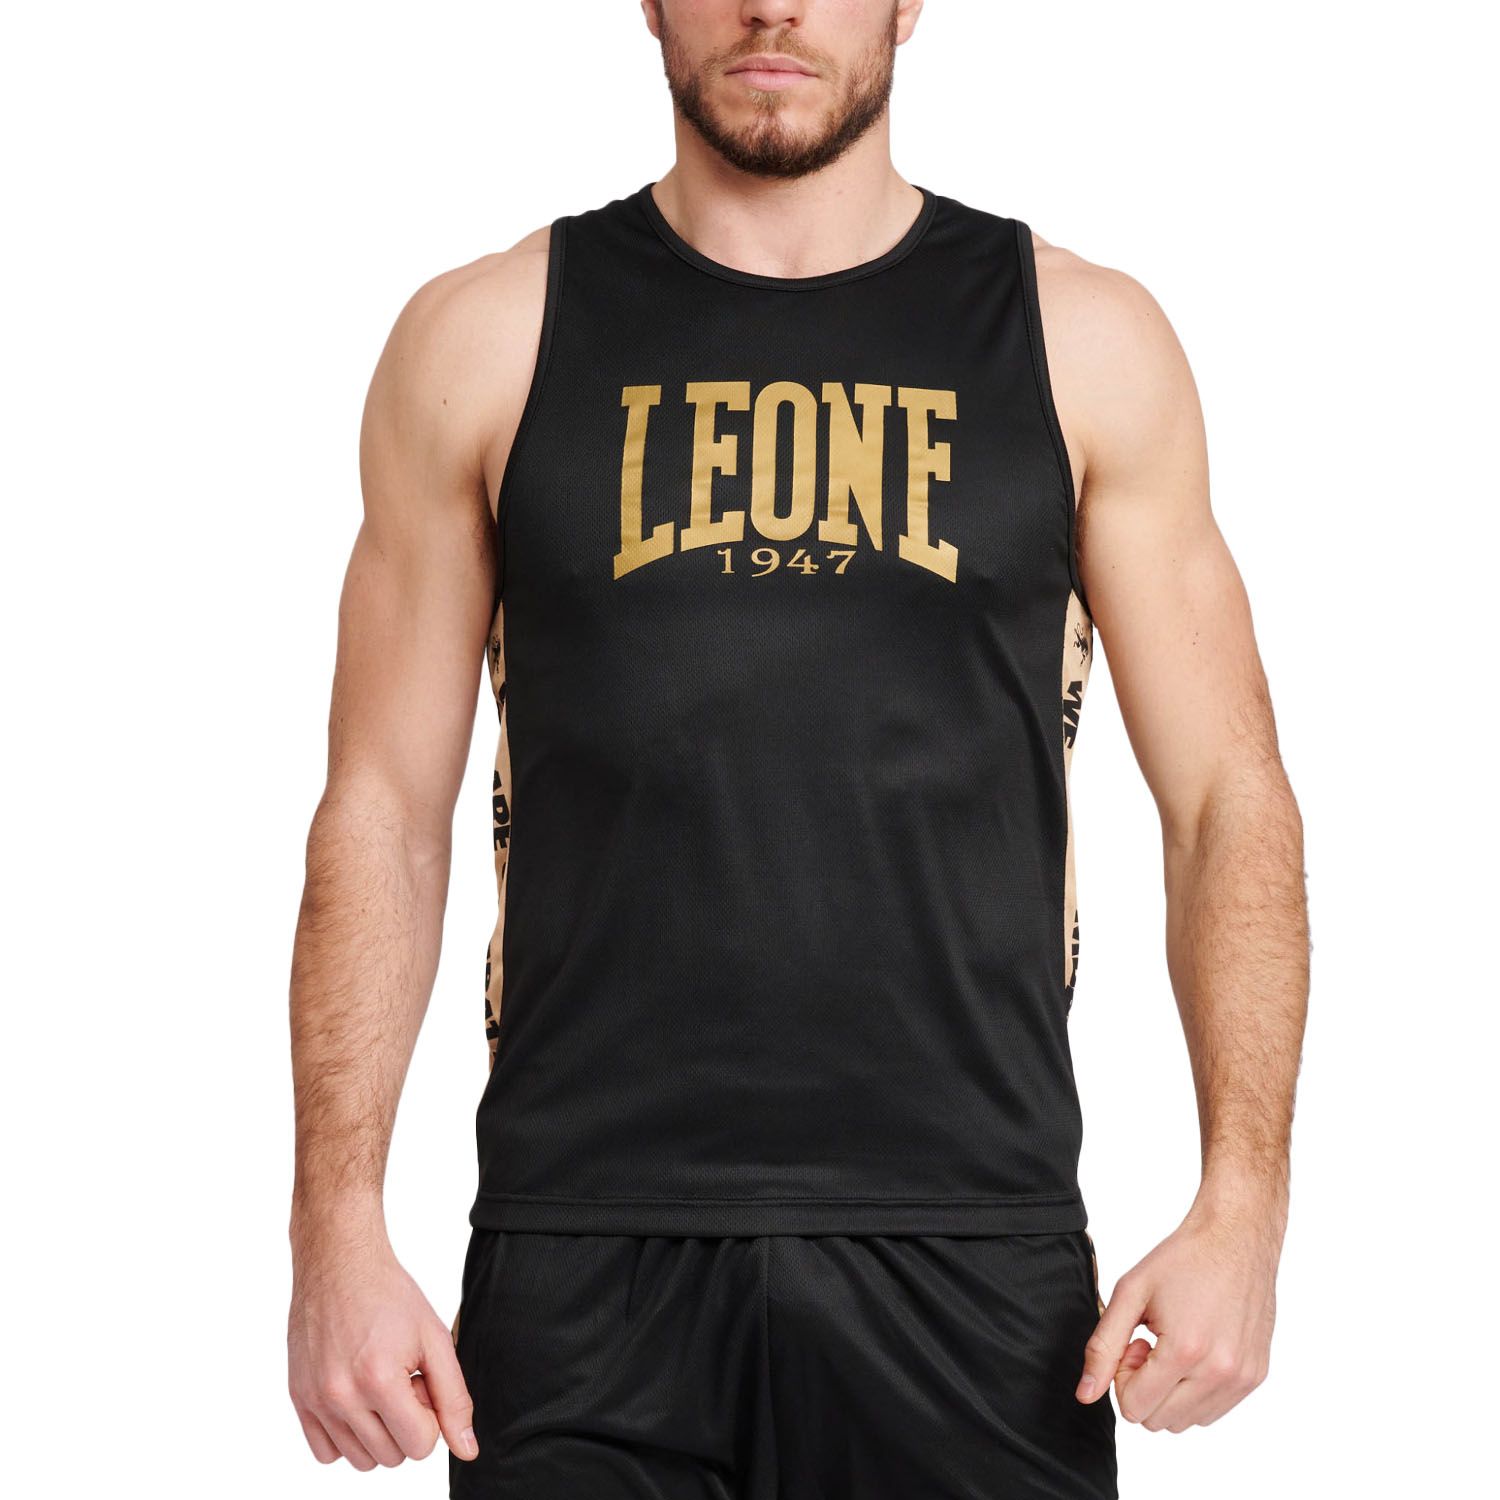 LEONE Fitness T-Shirt, DNA, ABX706, black-gold, M